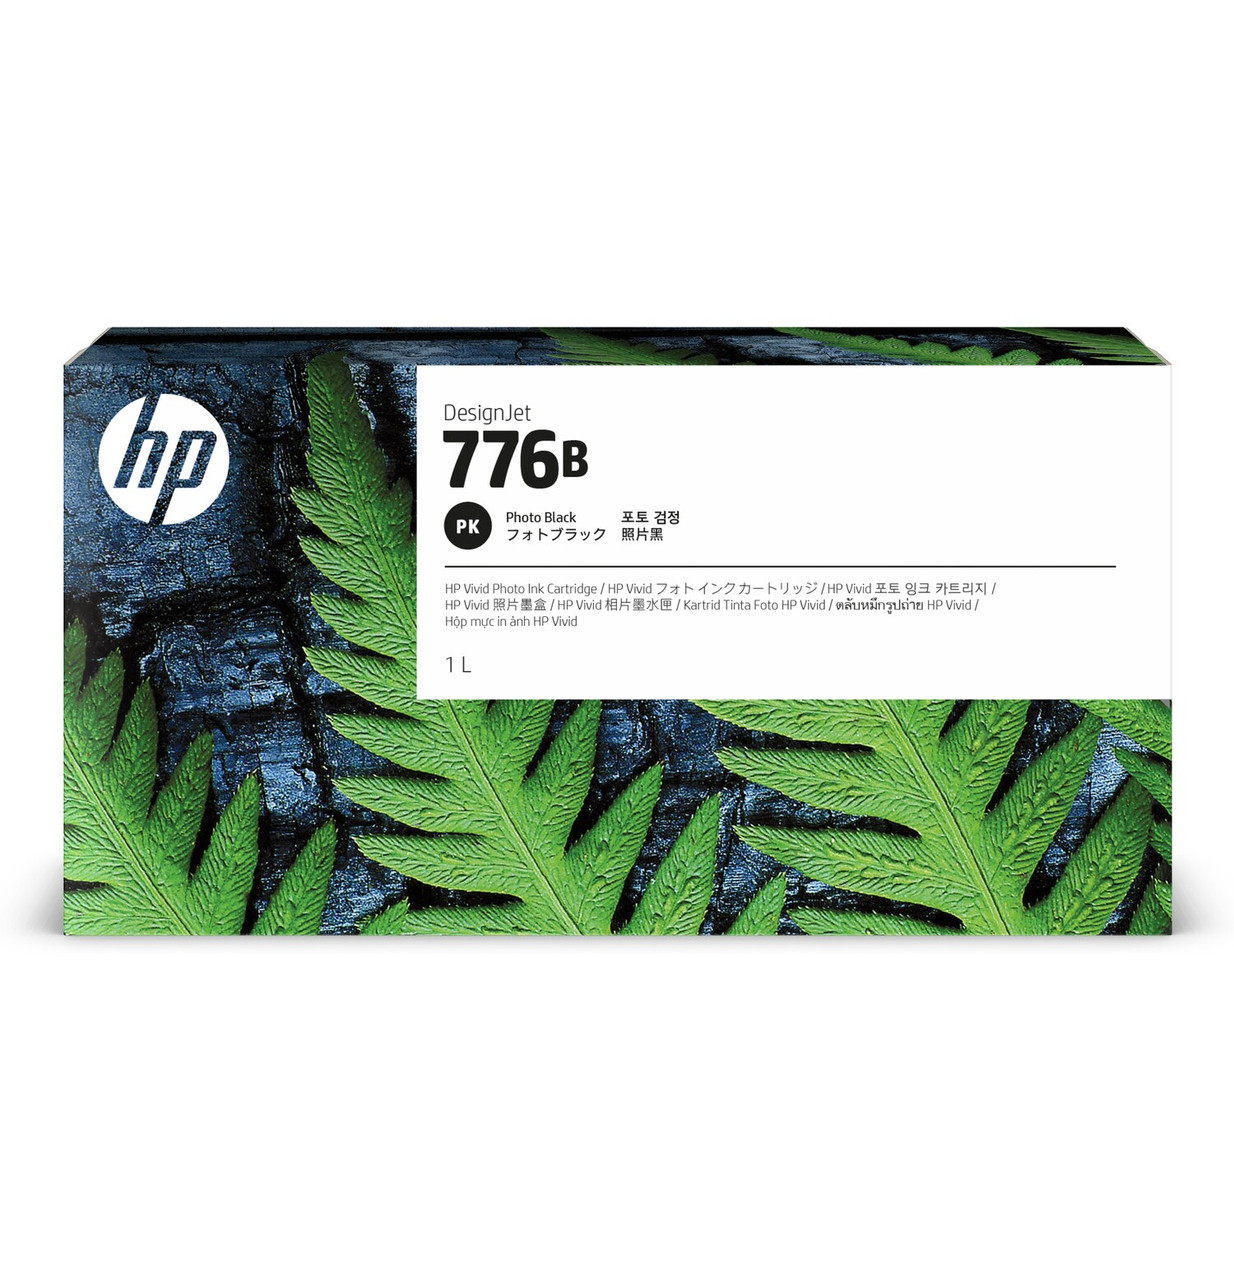 HP 776B 1L Photo Black DesignJet Ink Cartridge APJ